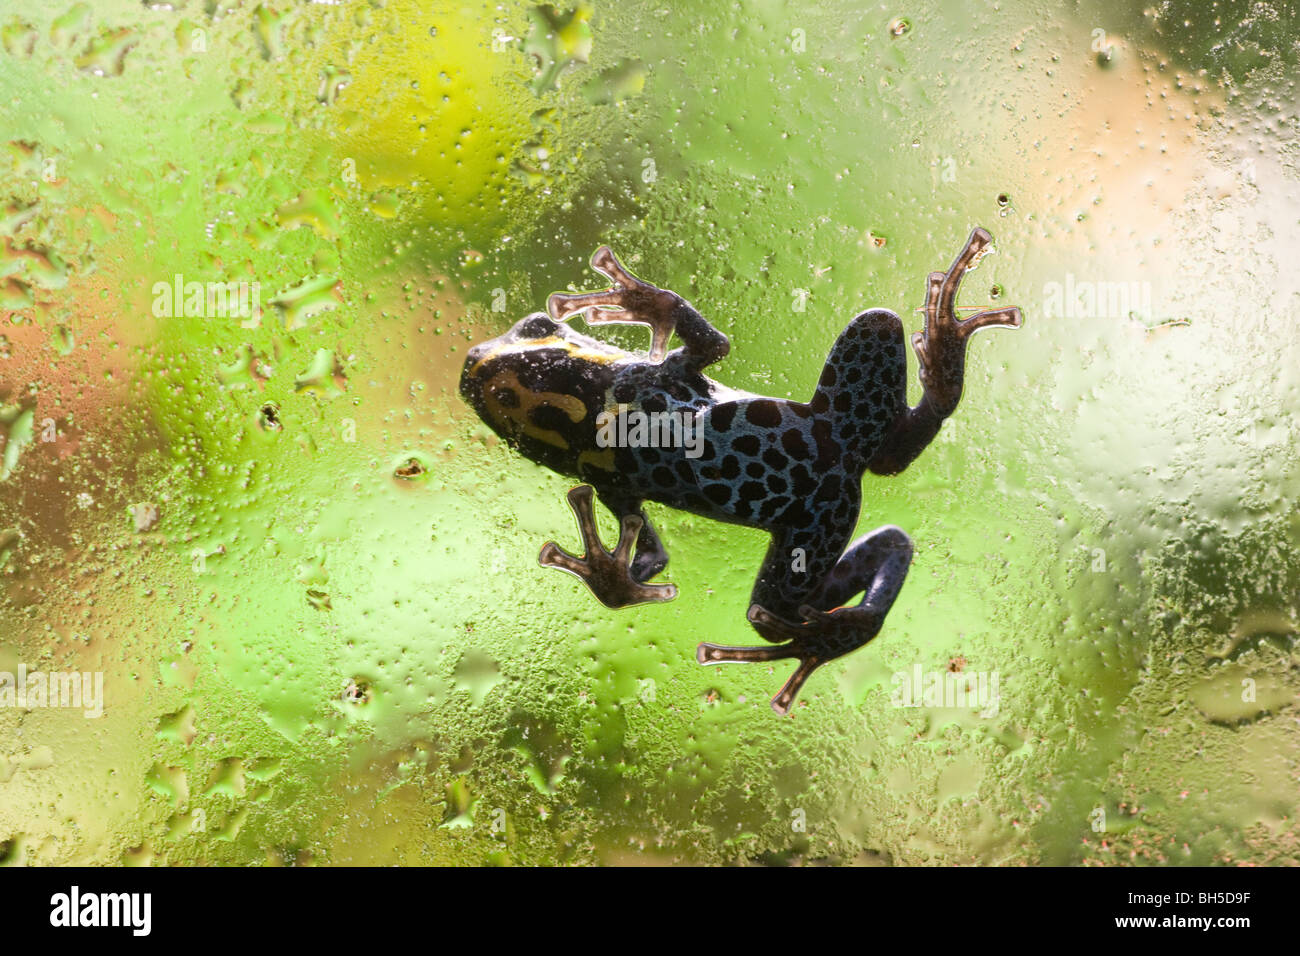 Poison dart frog (Ranitomeya ventrimaculata) climbing on glass